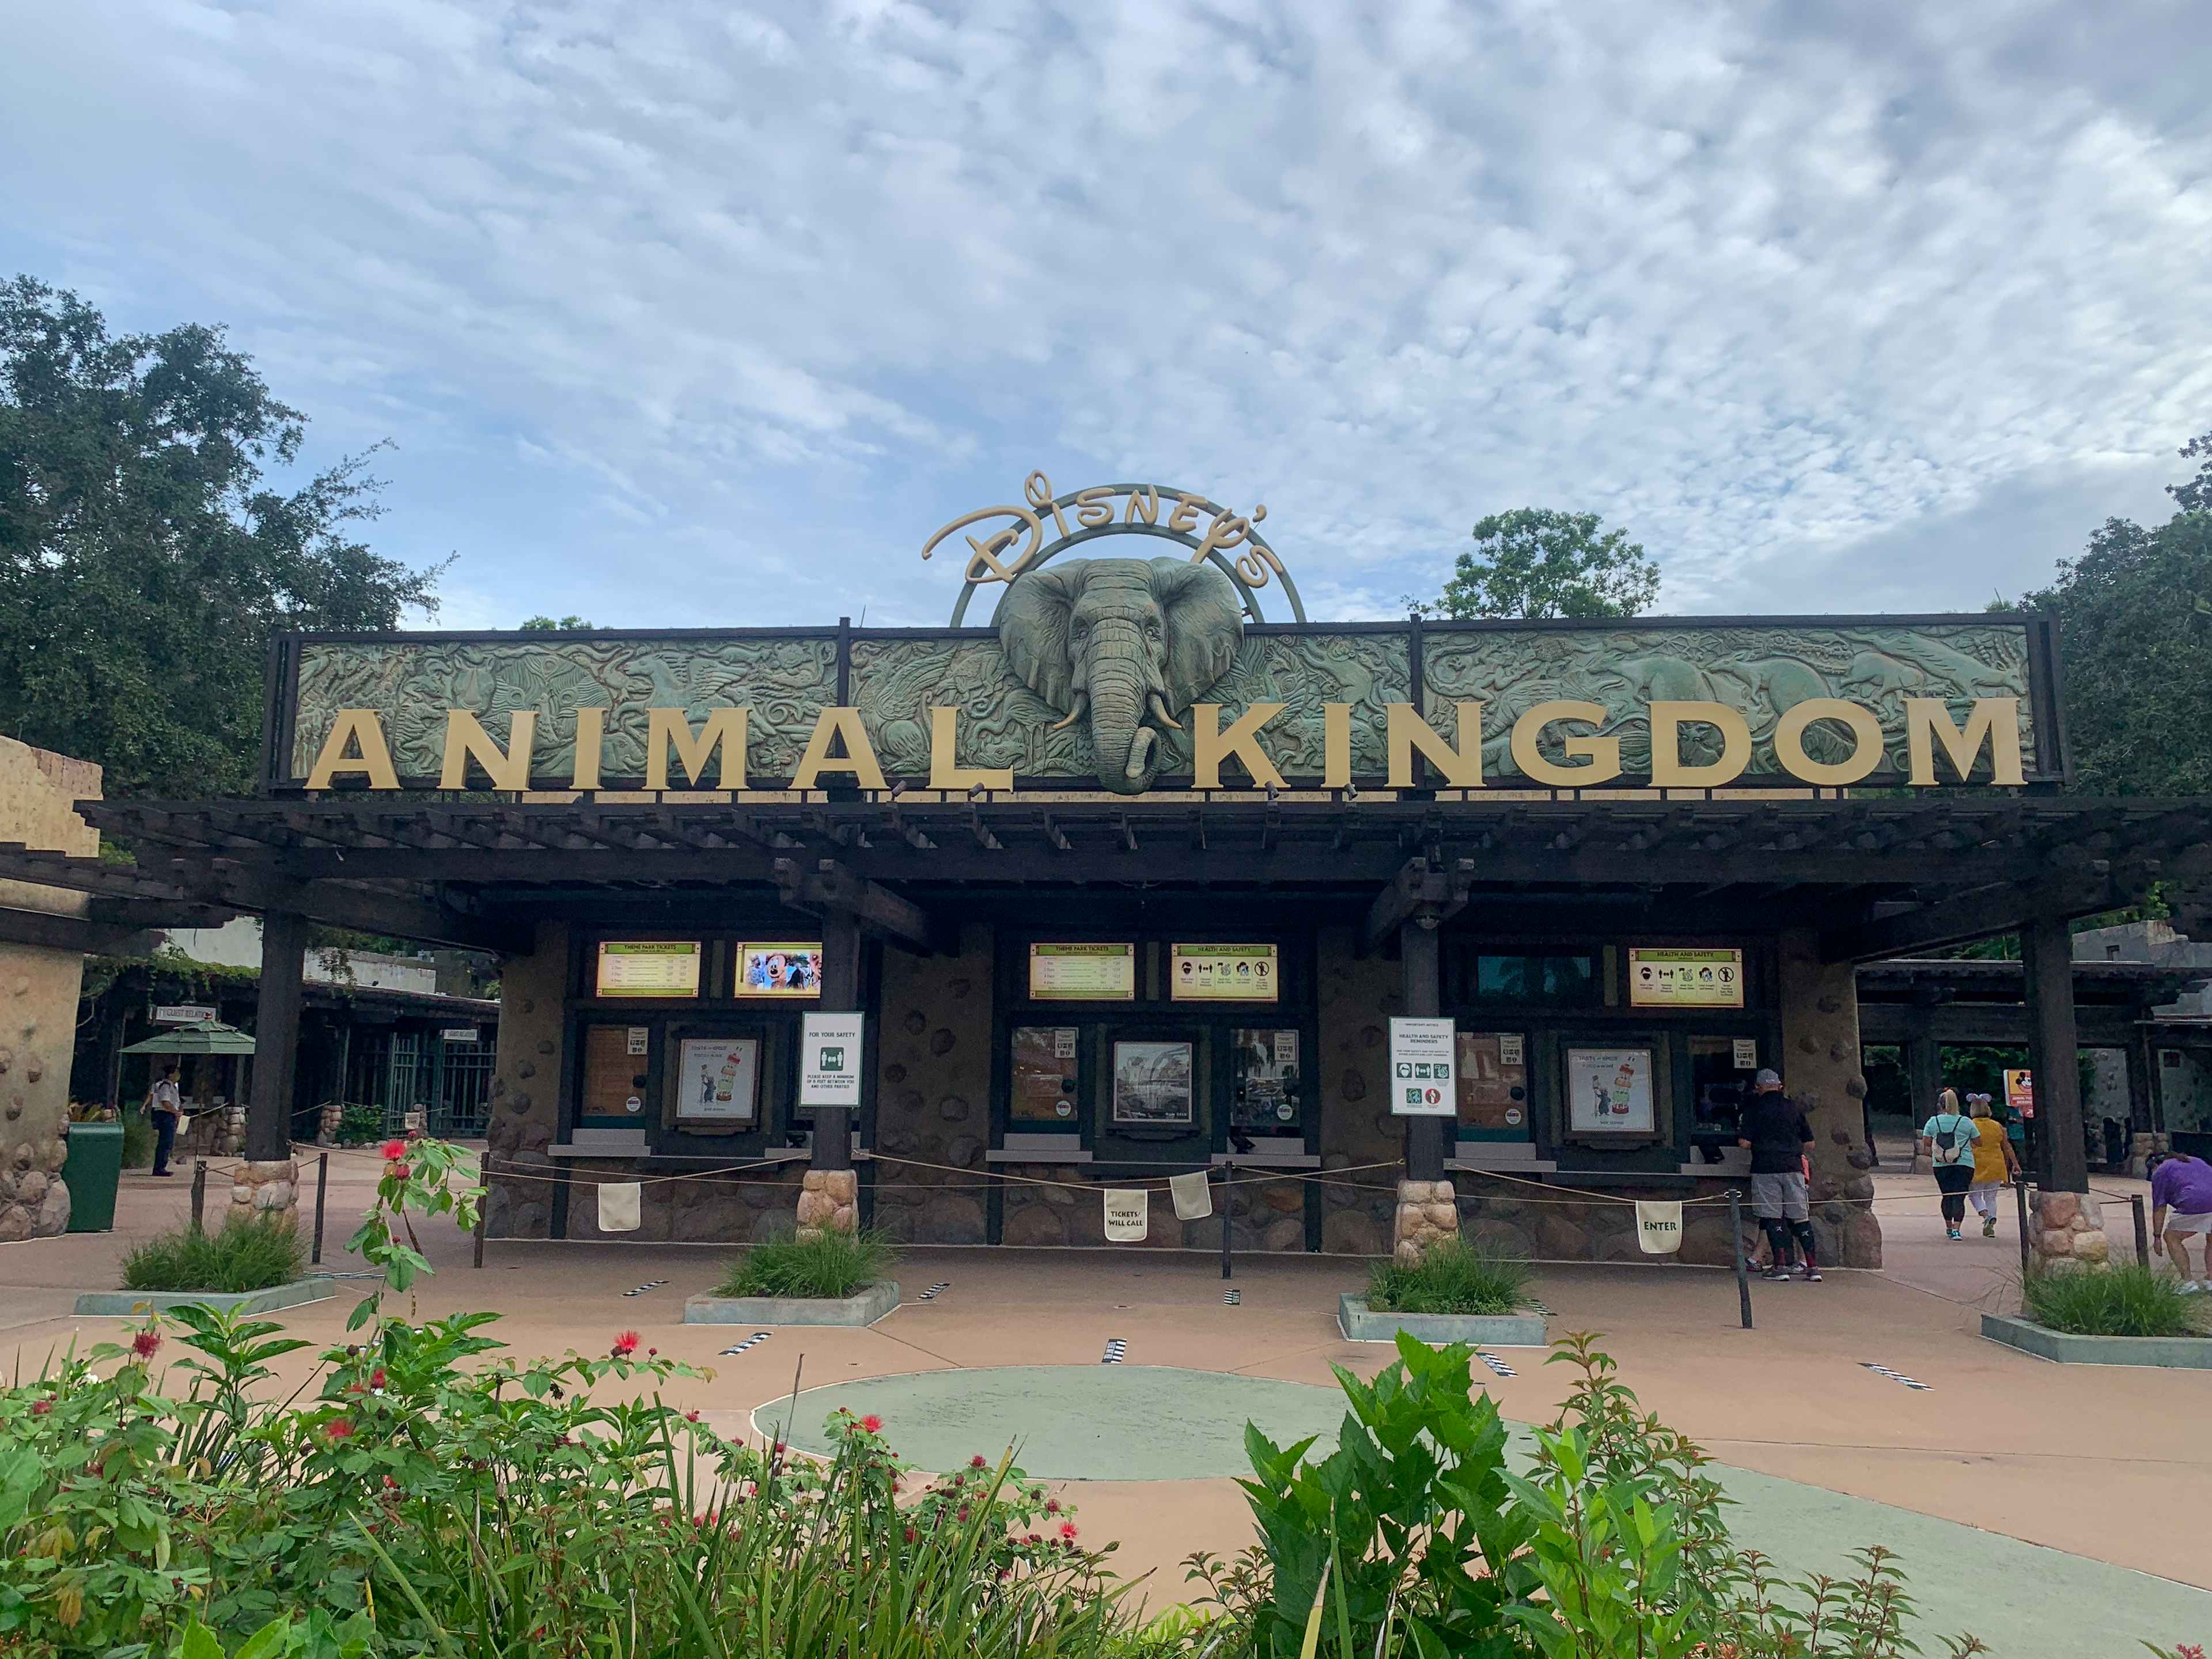 the entrance to the Animal Kingdom park at disney world